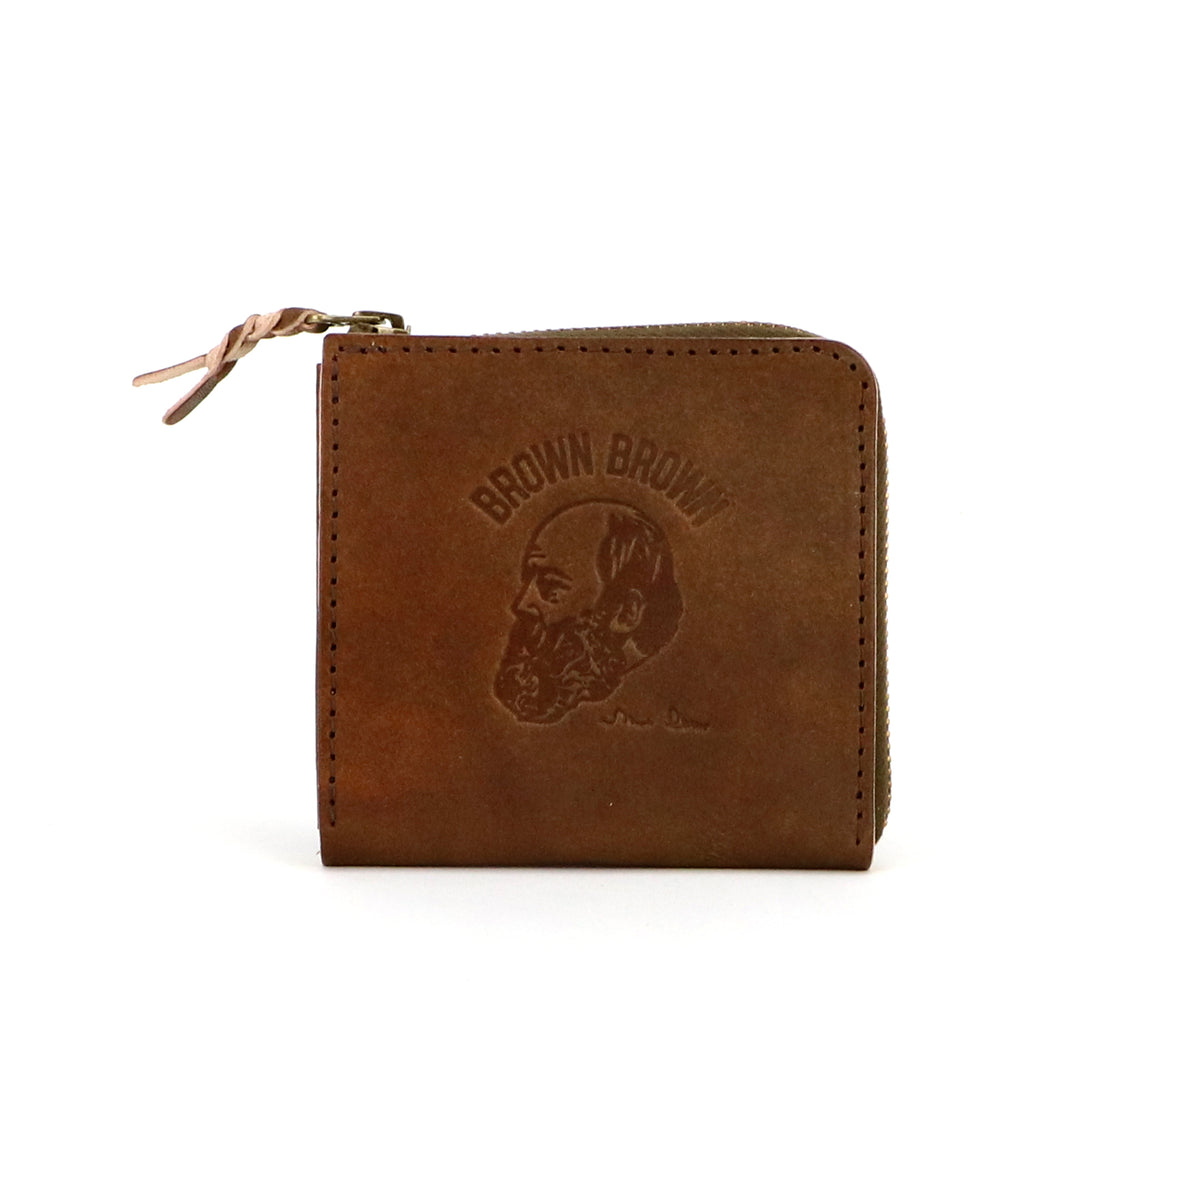 L compact wallet – BrownBrown